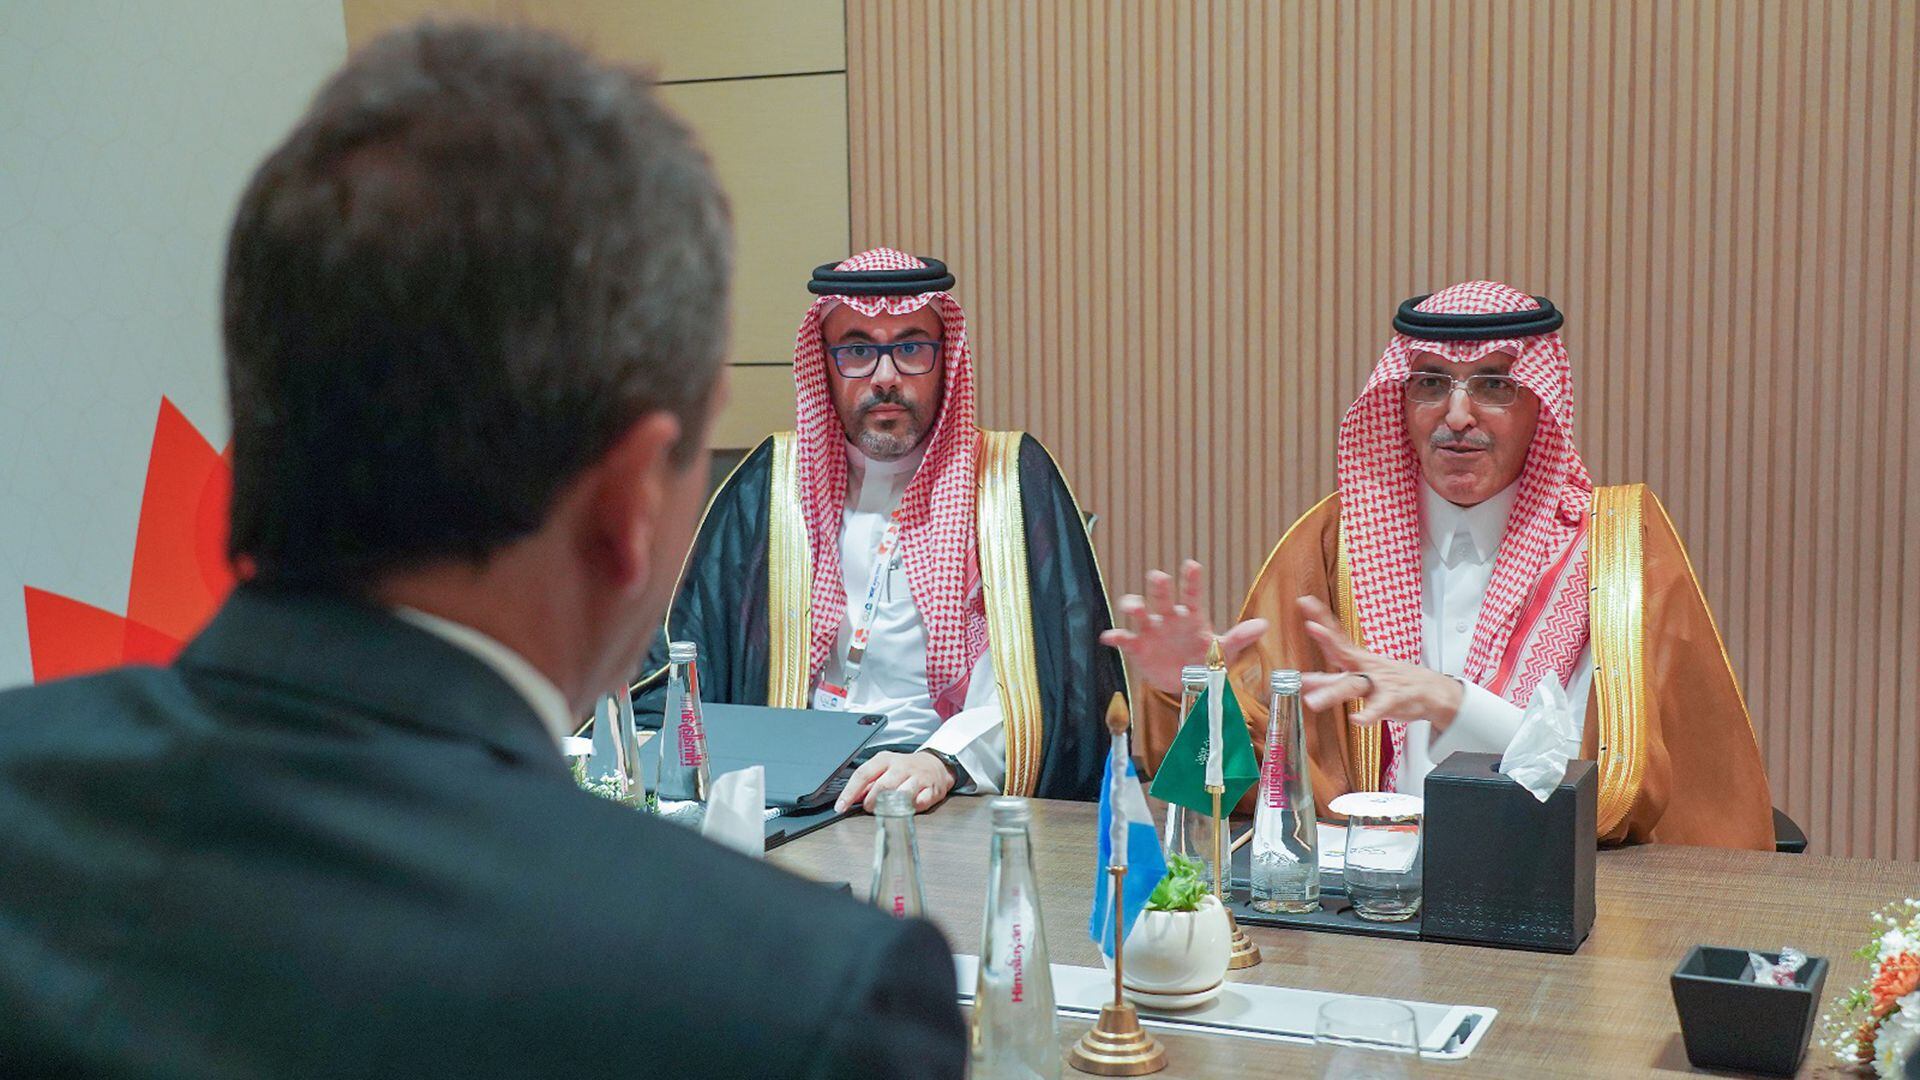 Massa ministro finanzas Arabia saudita